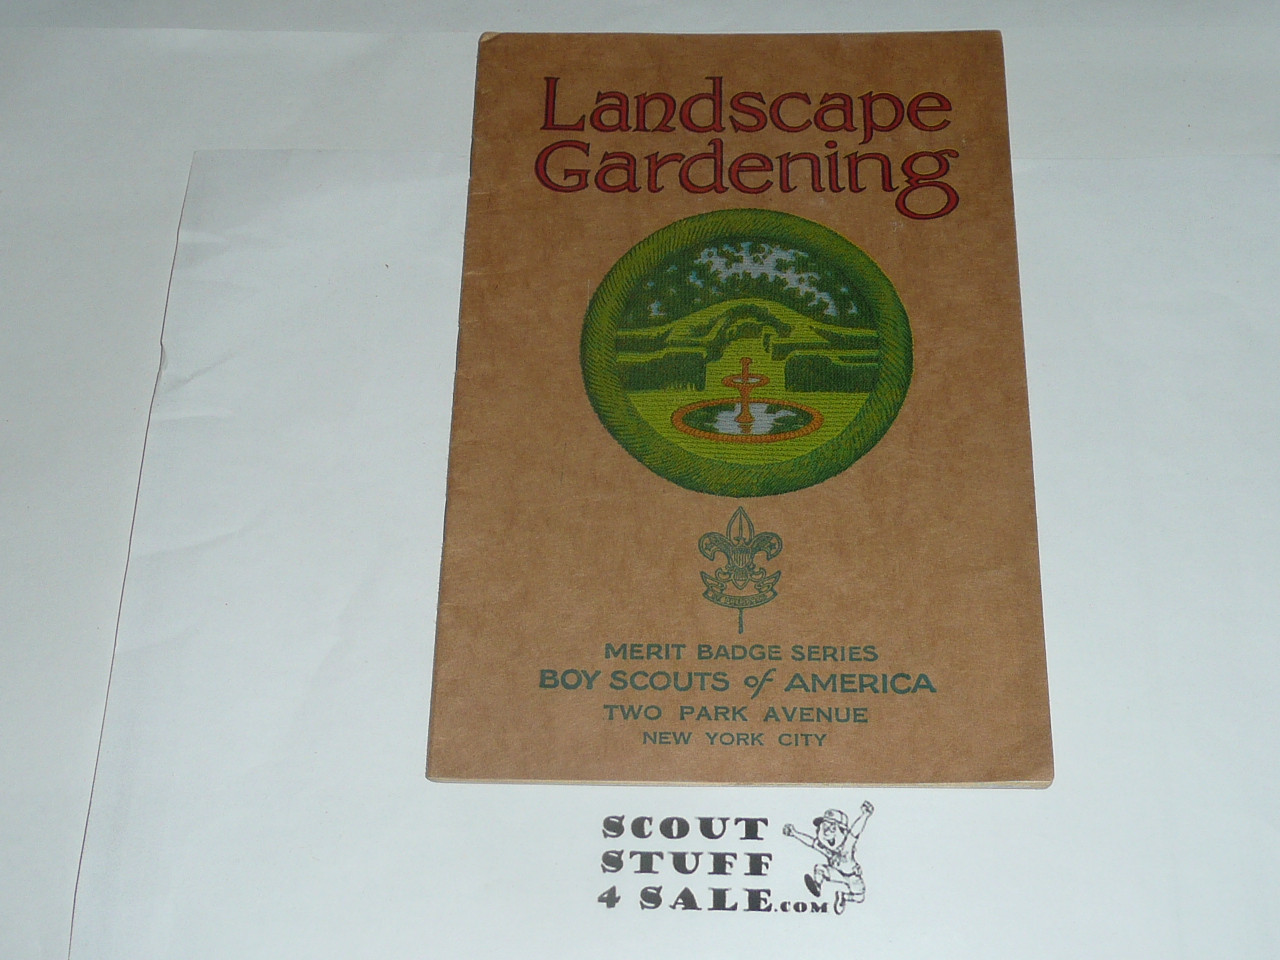 Landscape Gardening Merit Badge Pamphlet, Type 3, Tan Cover, 4-34 Printing